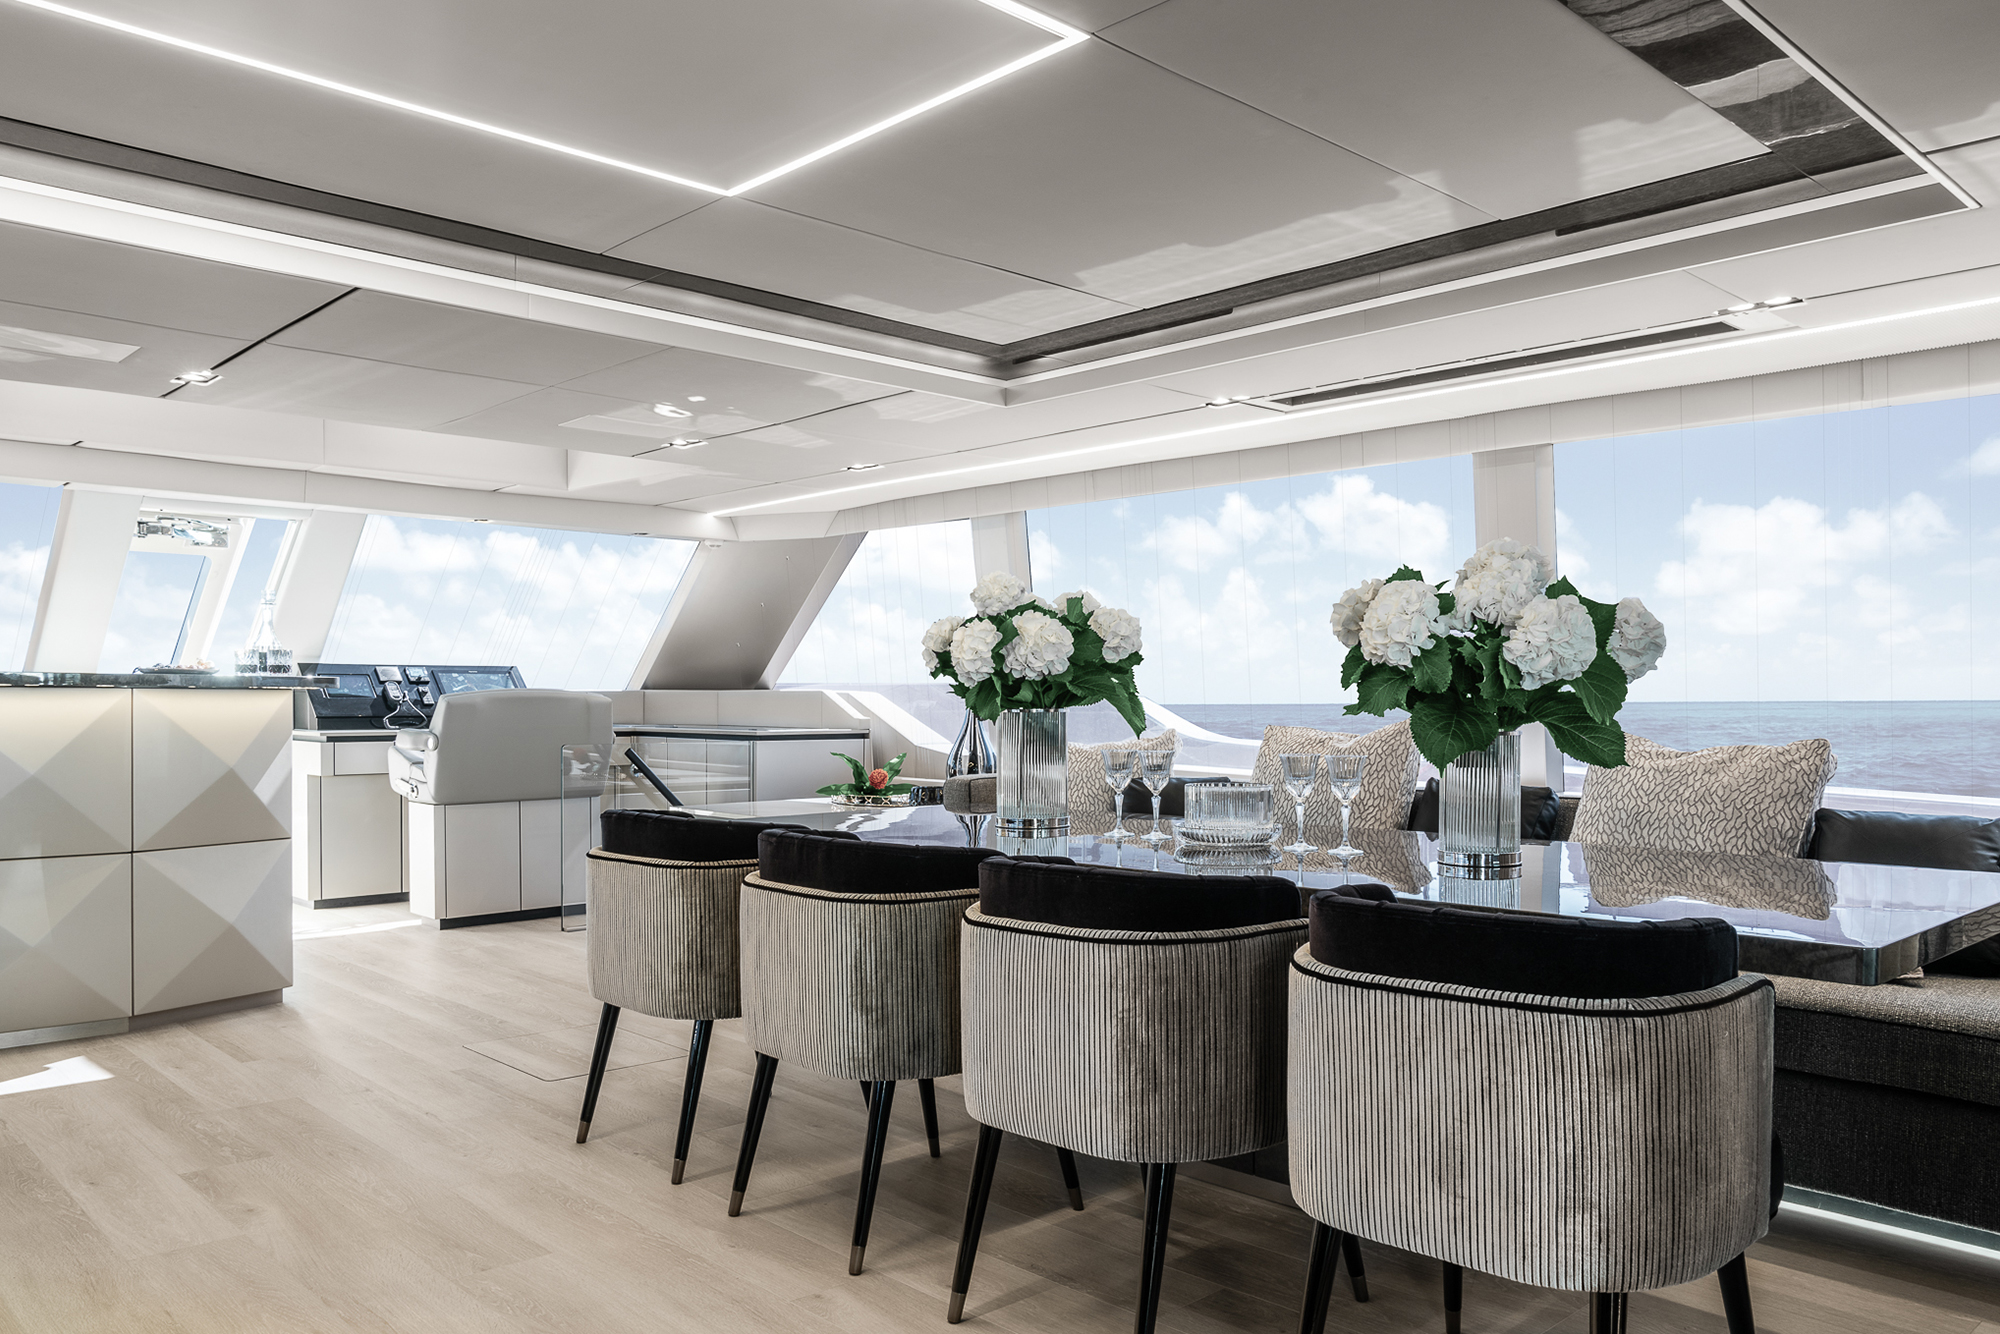 80' Sunreef Yacht power catamaran by Aeroyacht Multihull Dealers